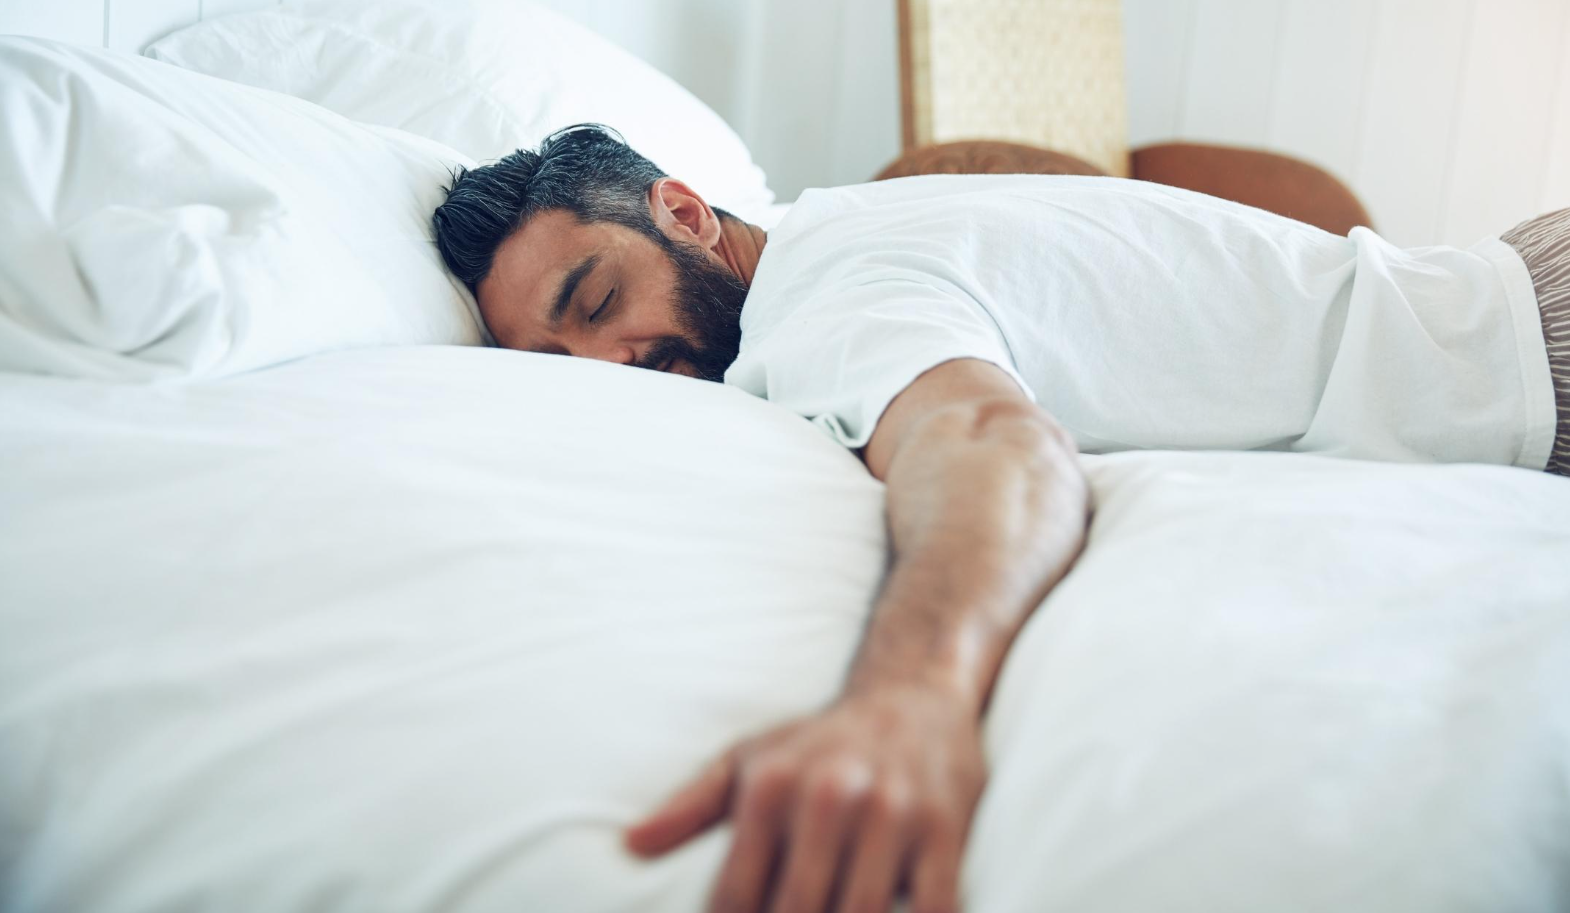 Stomach Sleeping (Prone): Effects on Sleep and Health